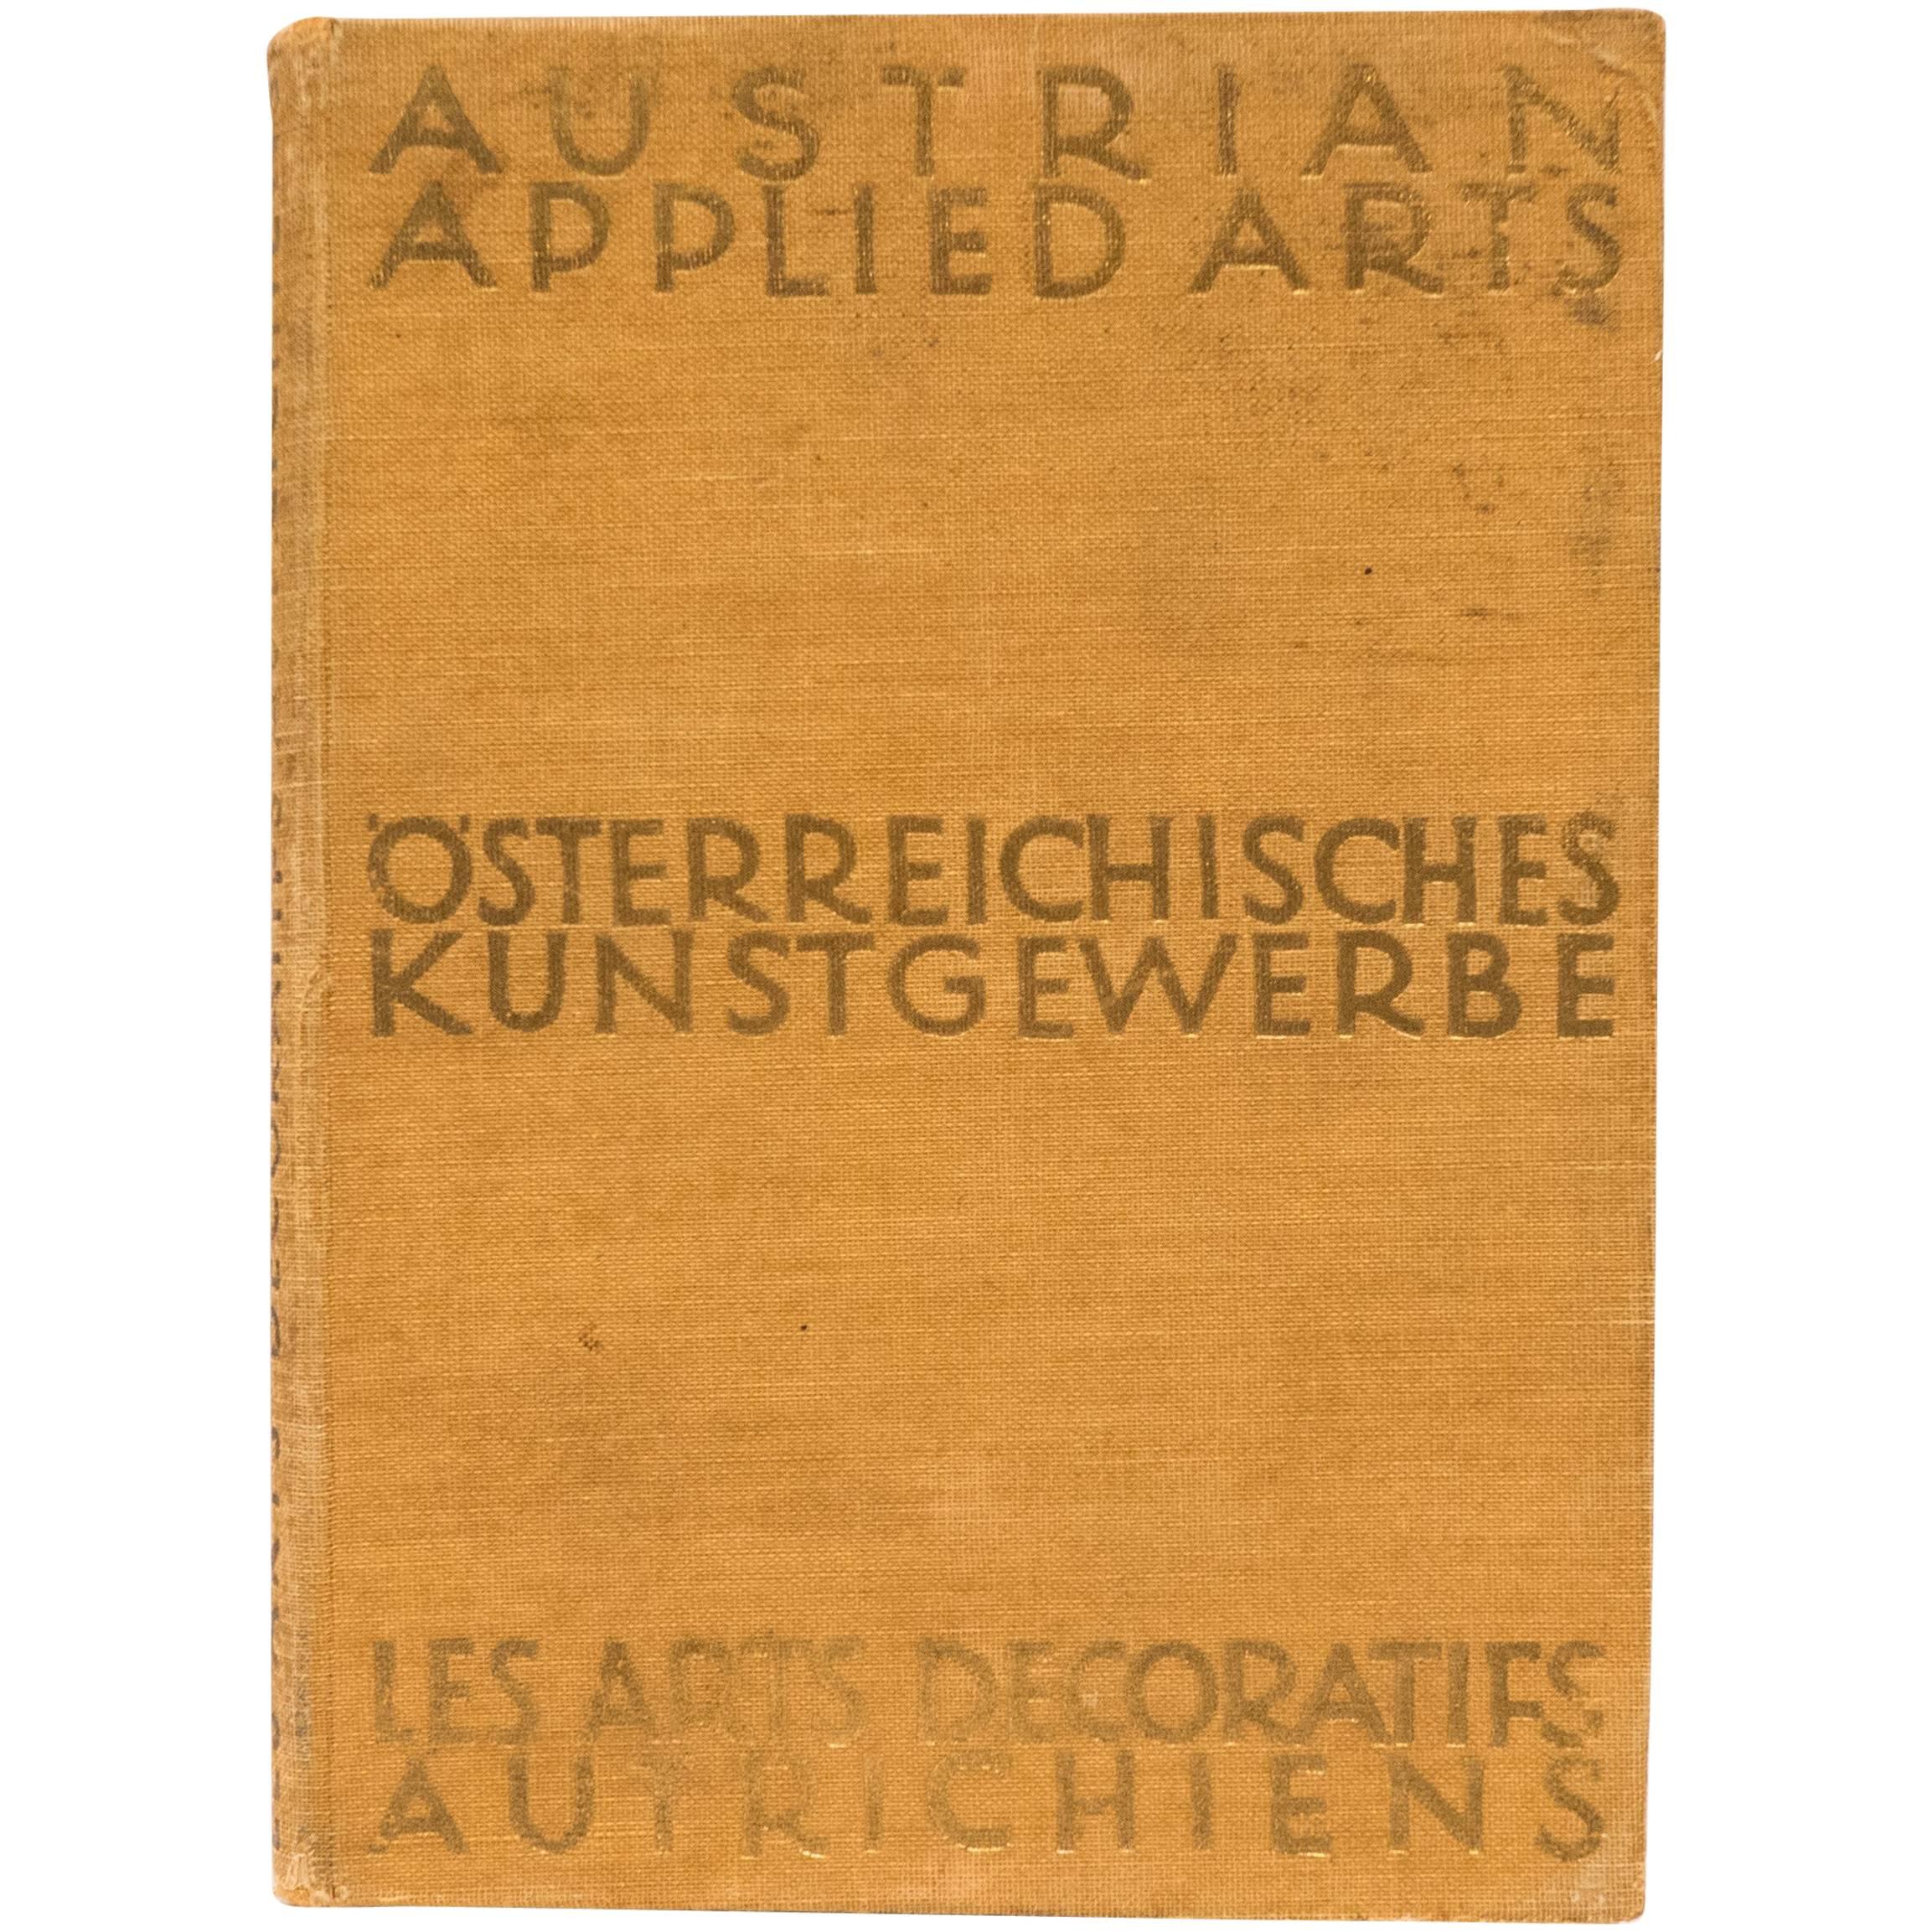 "Austrian Applied Arts" Book